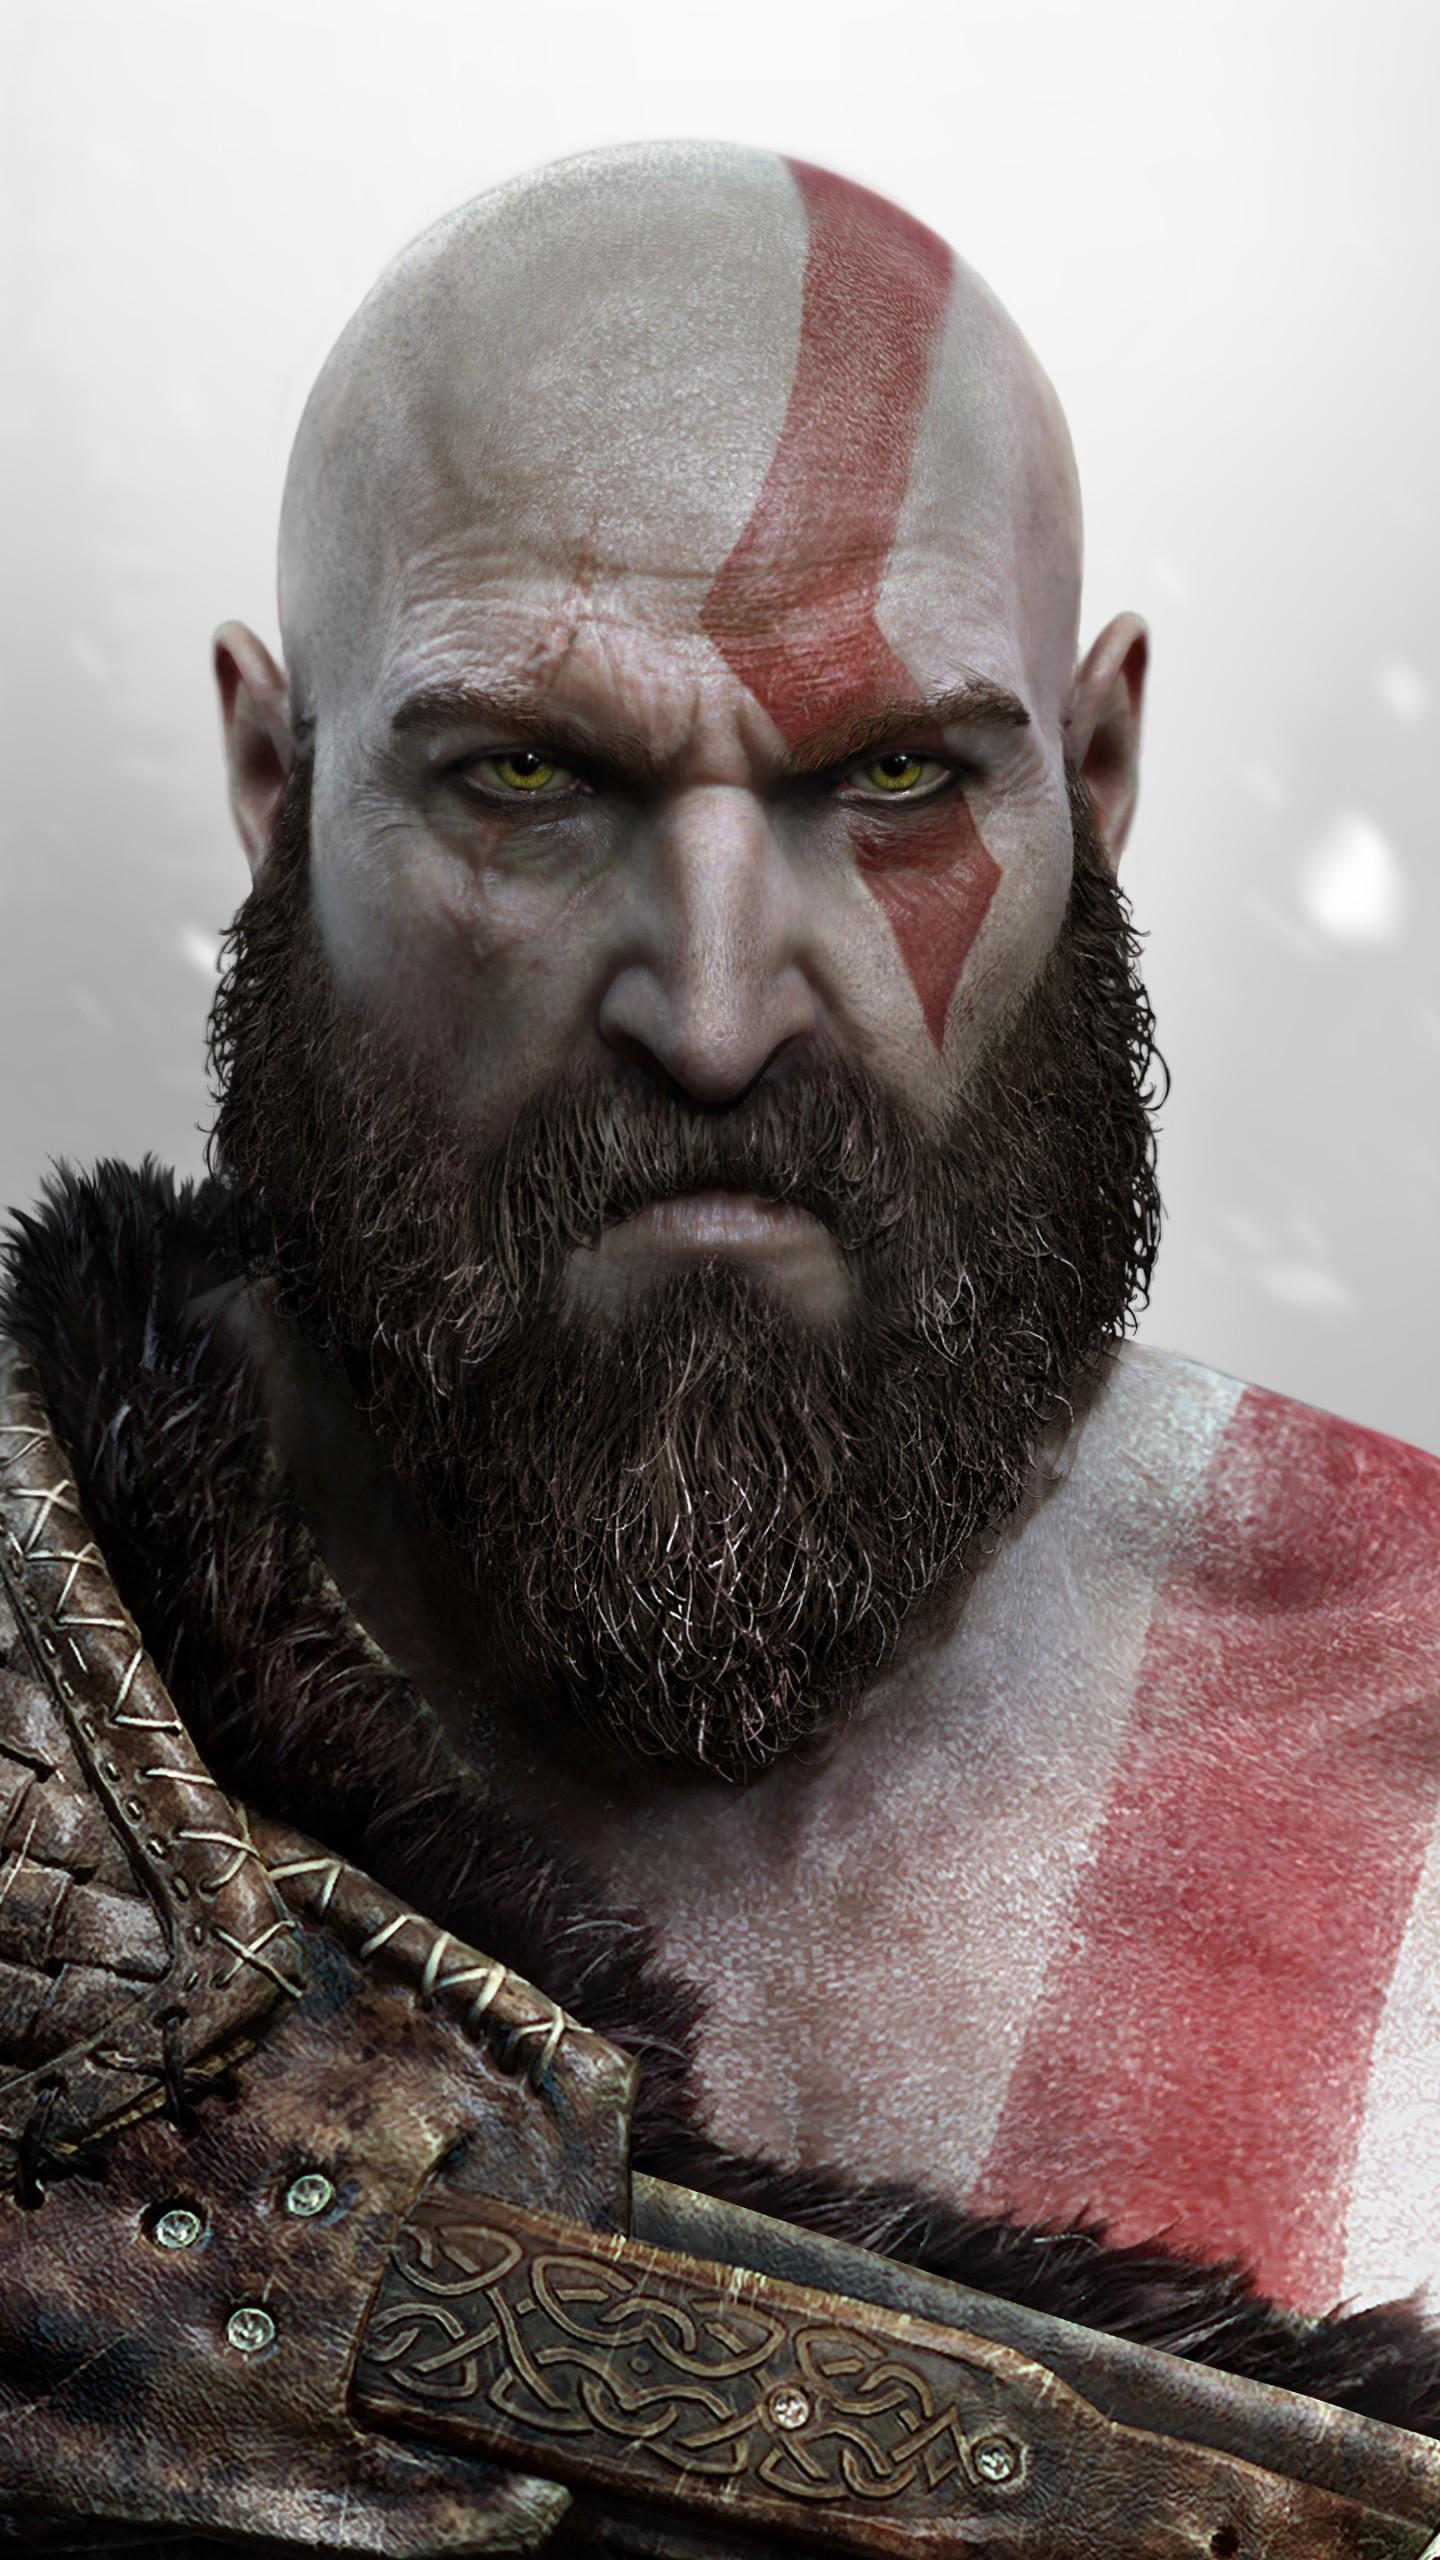 Wallpaper God of War, Kratos, Ps Games